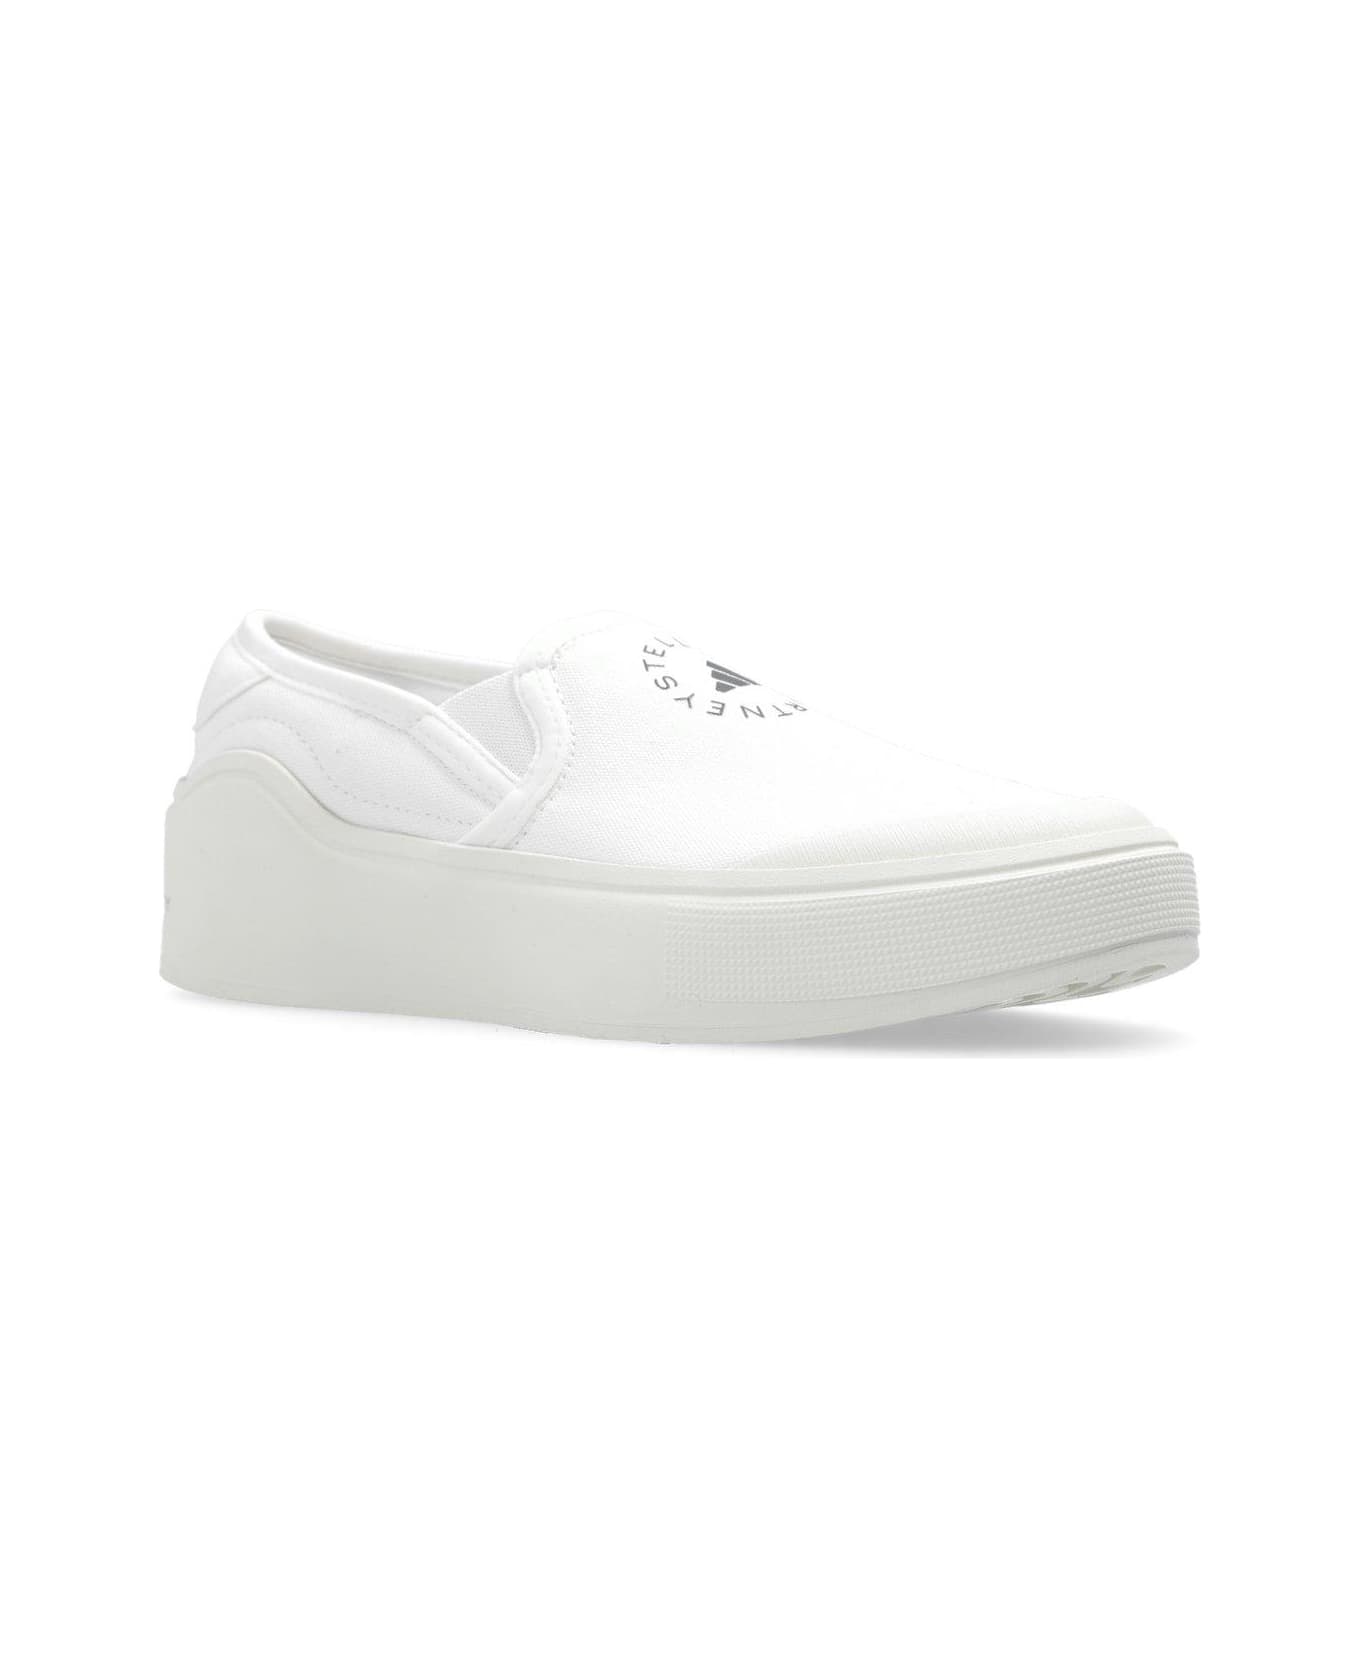 Adidas by Stella McCartney Court Slip-on Sneakers スニーカー